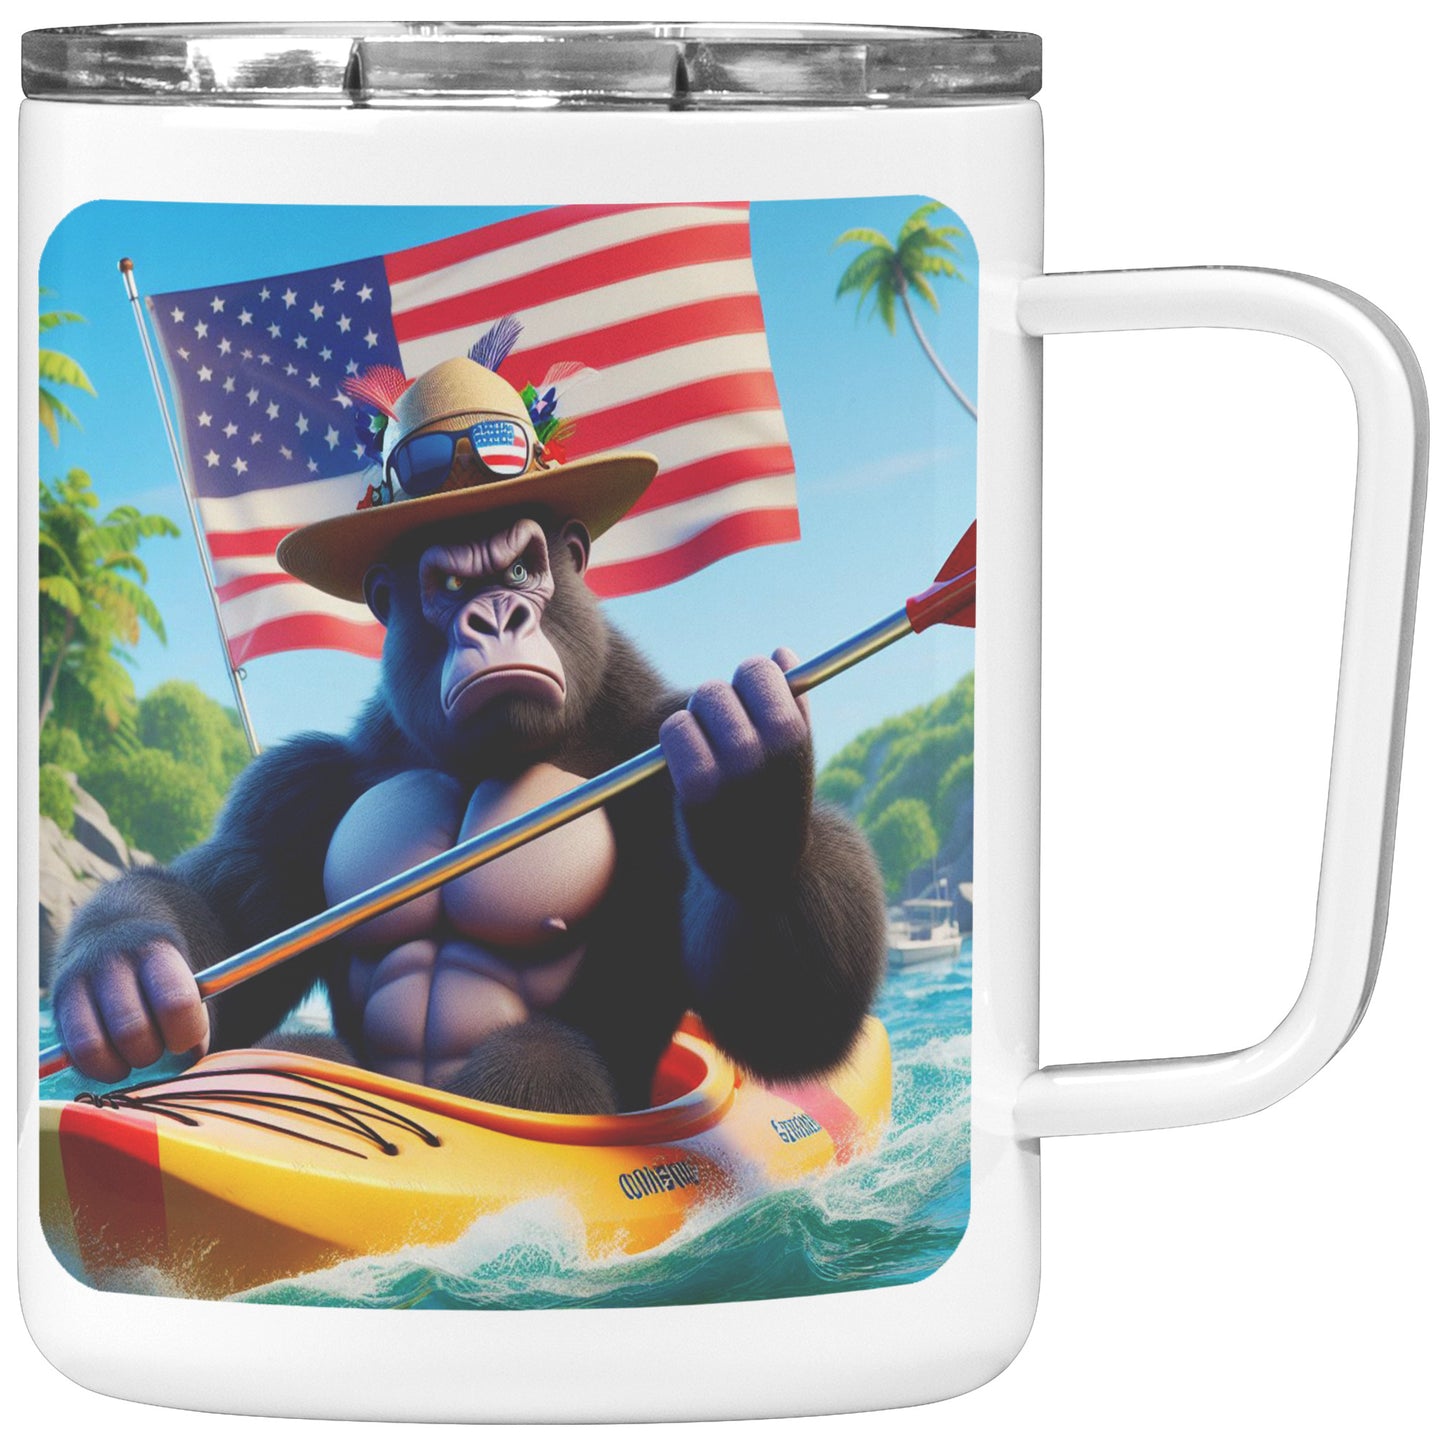 Grumpy Gorilla - Insulated Coffee Mug #46